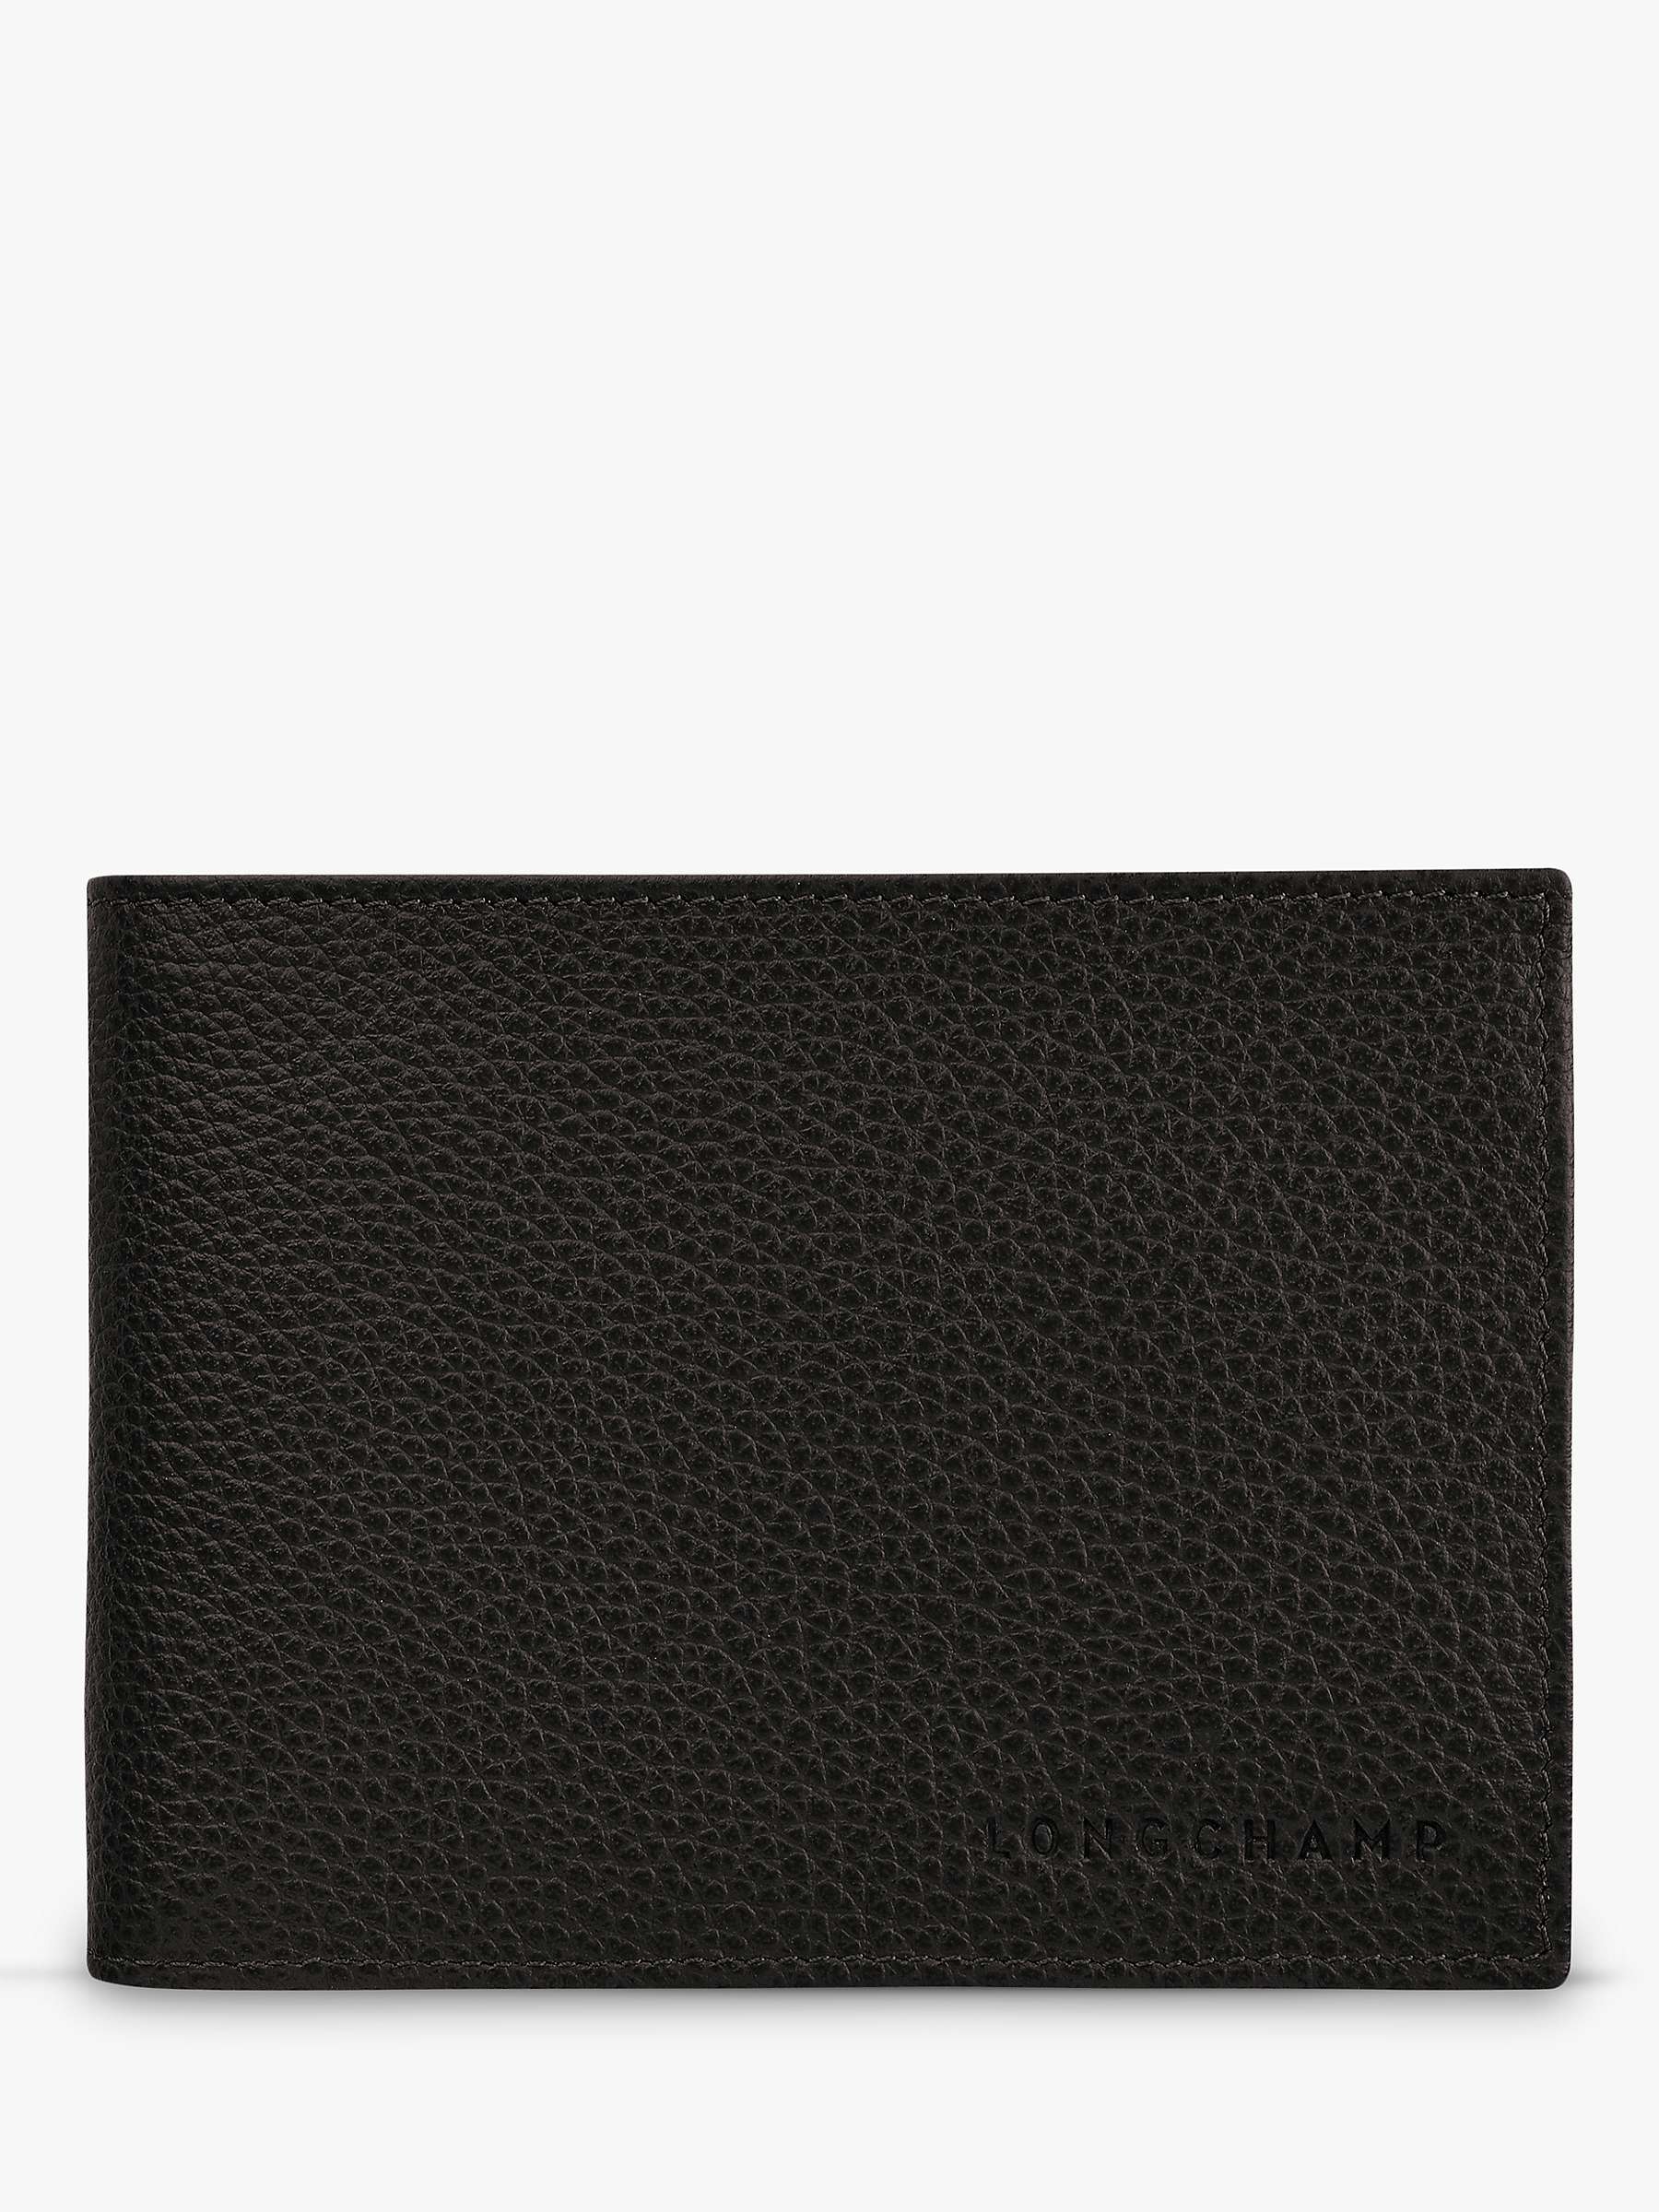 Buy Longchamp Le Foulonné Leather Card & Coin Wallet Online at johnlewis.com